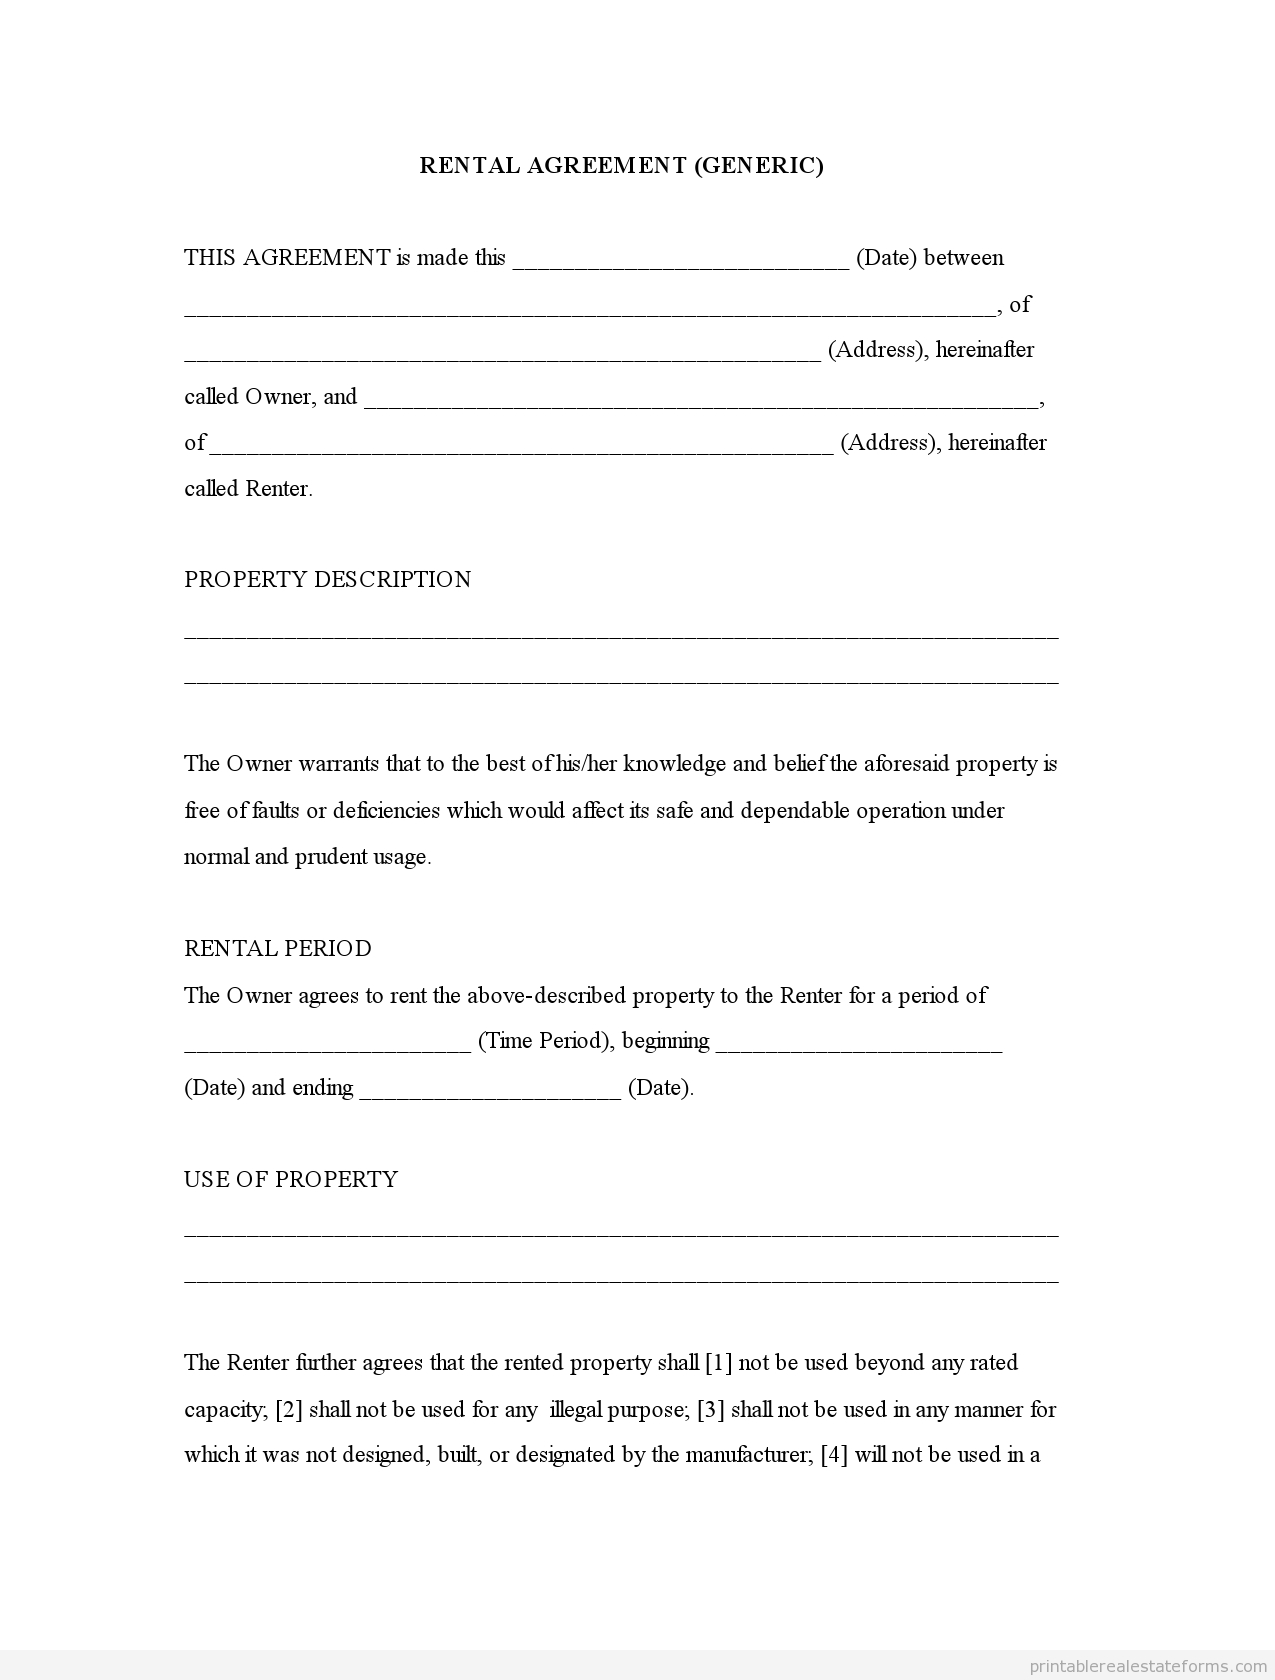 Free Printable Rental Agreement | Rental Agreement (Generic)0001 - Free Printable Lease Agreement Ny